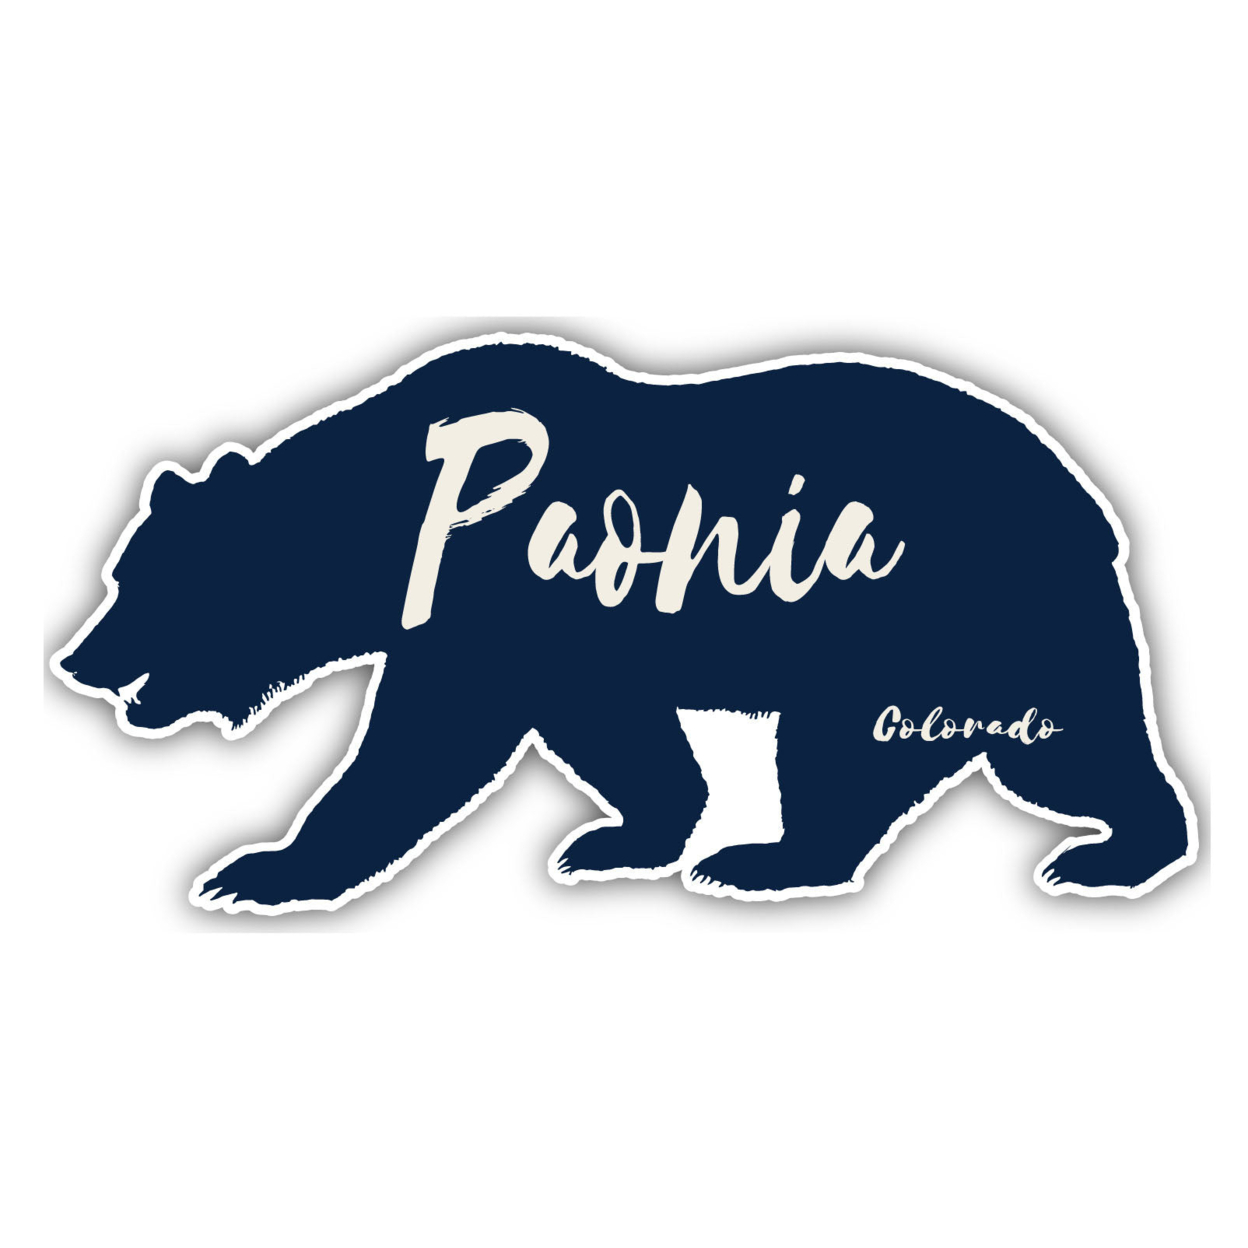 Paonia Colorado Souvenir Decorative Stickers (Choose Theme And Size) - Single Unit, 2-Inch, Bear